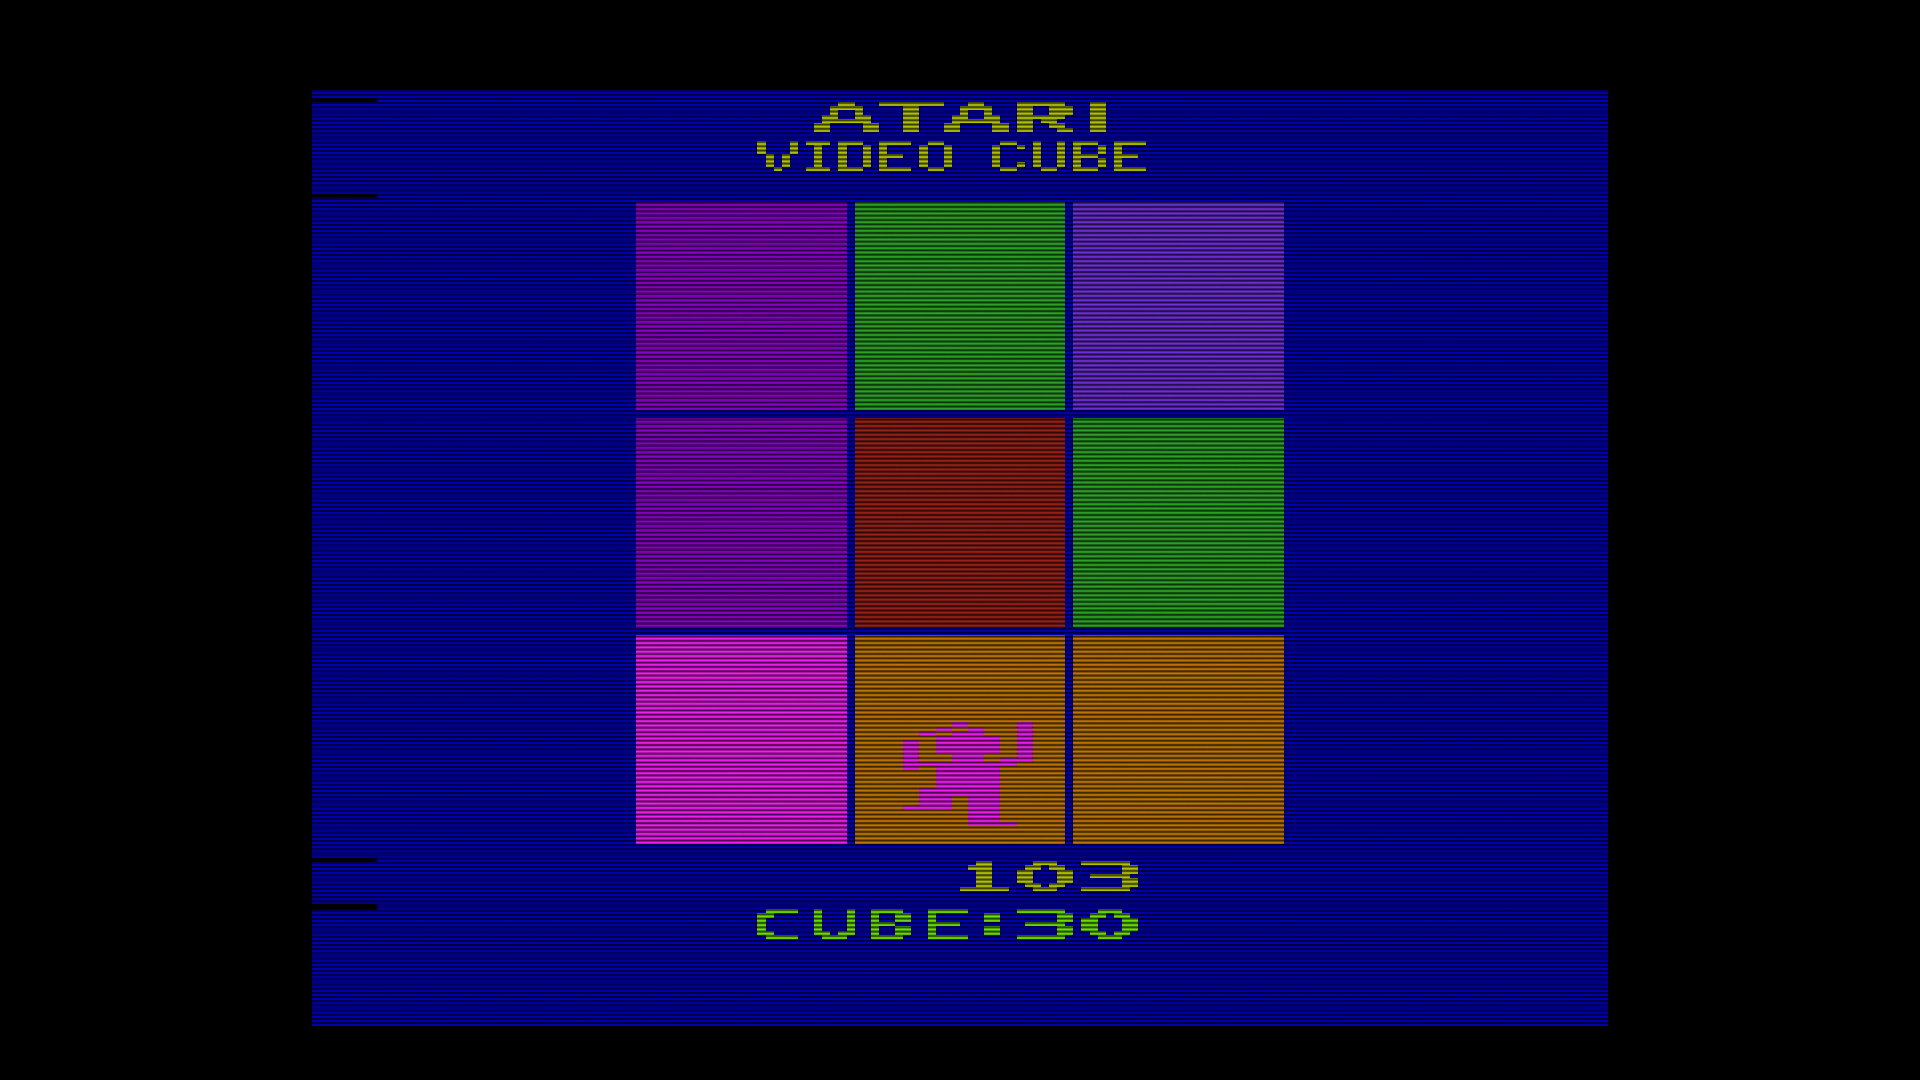 Atari Flashback Classics Volume 1 and Volume 2 Video Cube